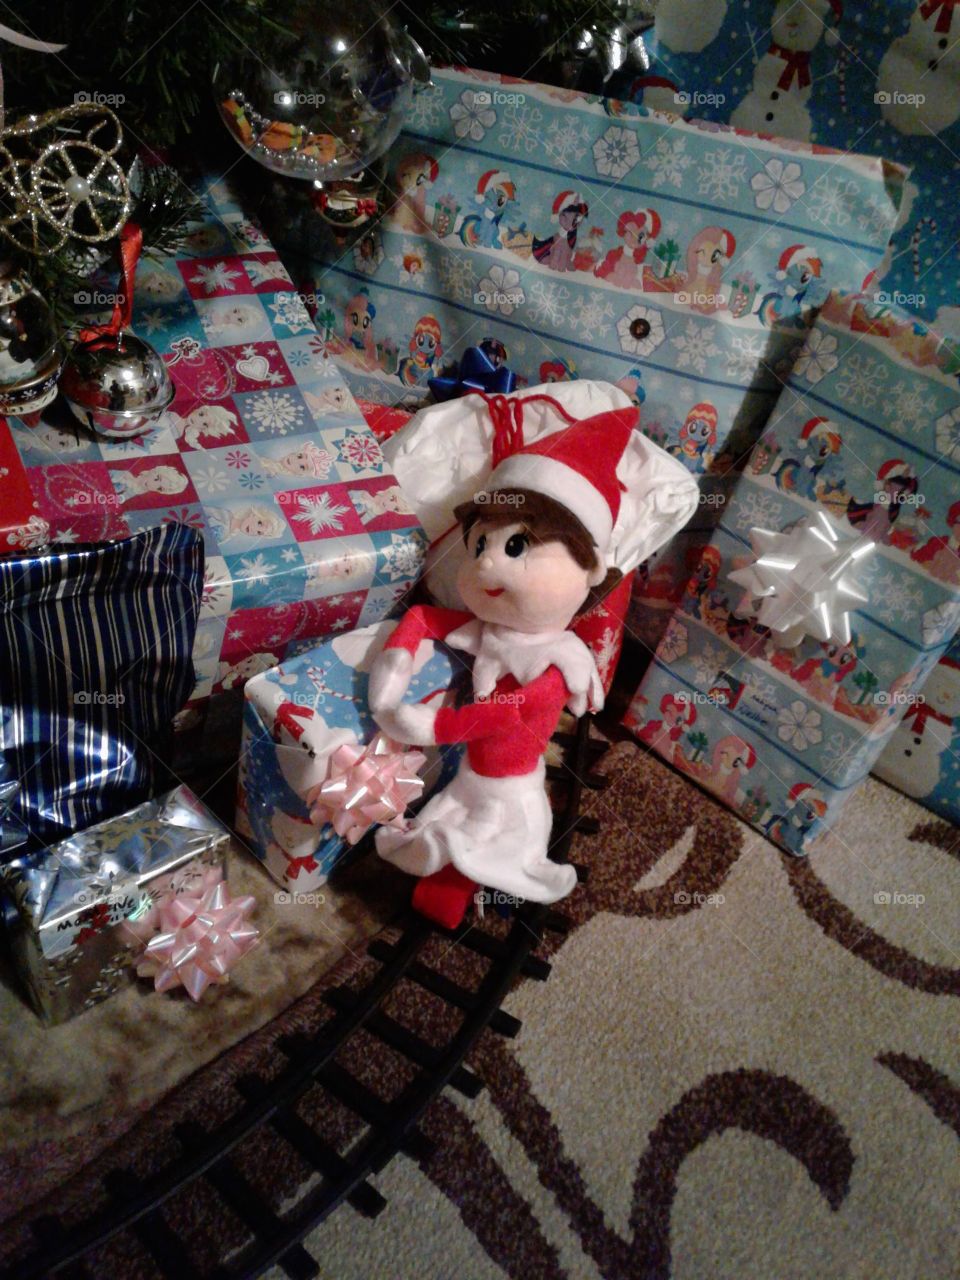 Christmas, Elf on the shelf, Gifts, Winter, California